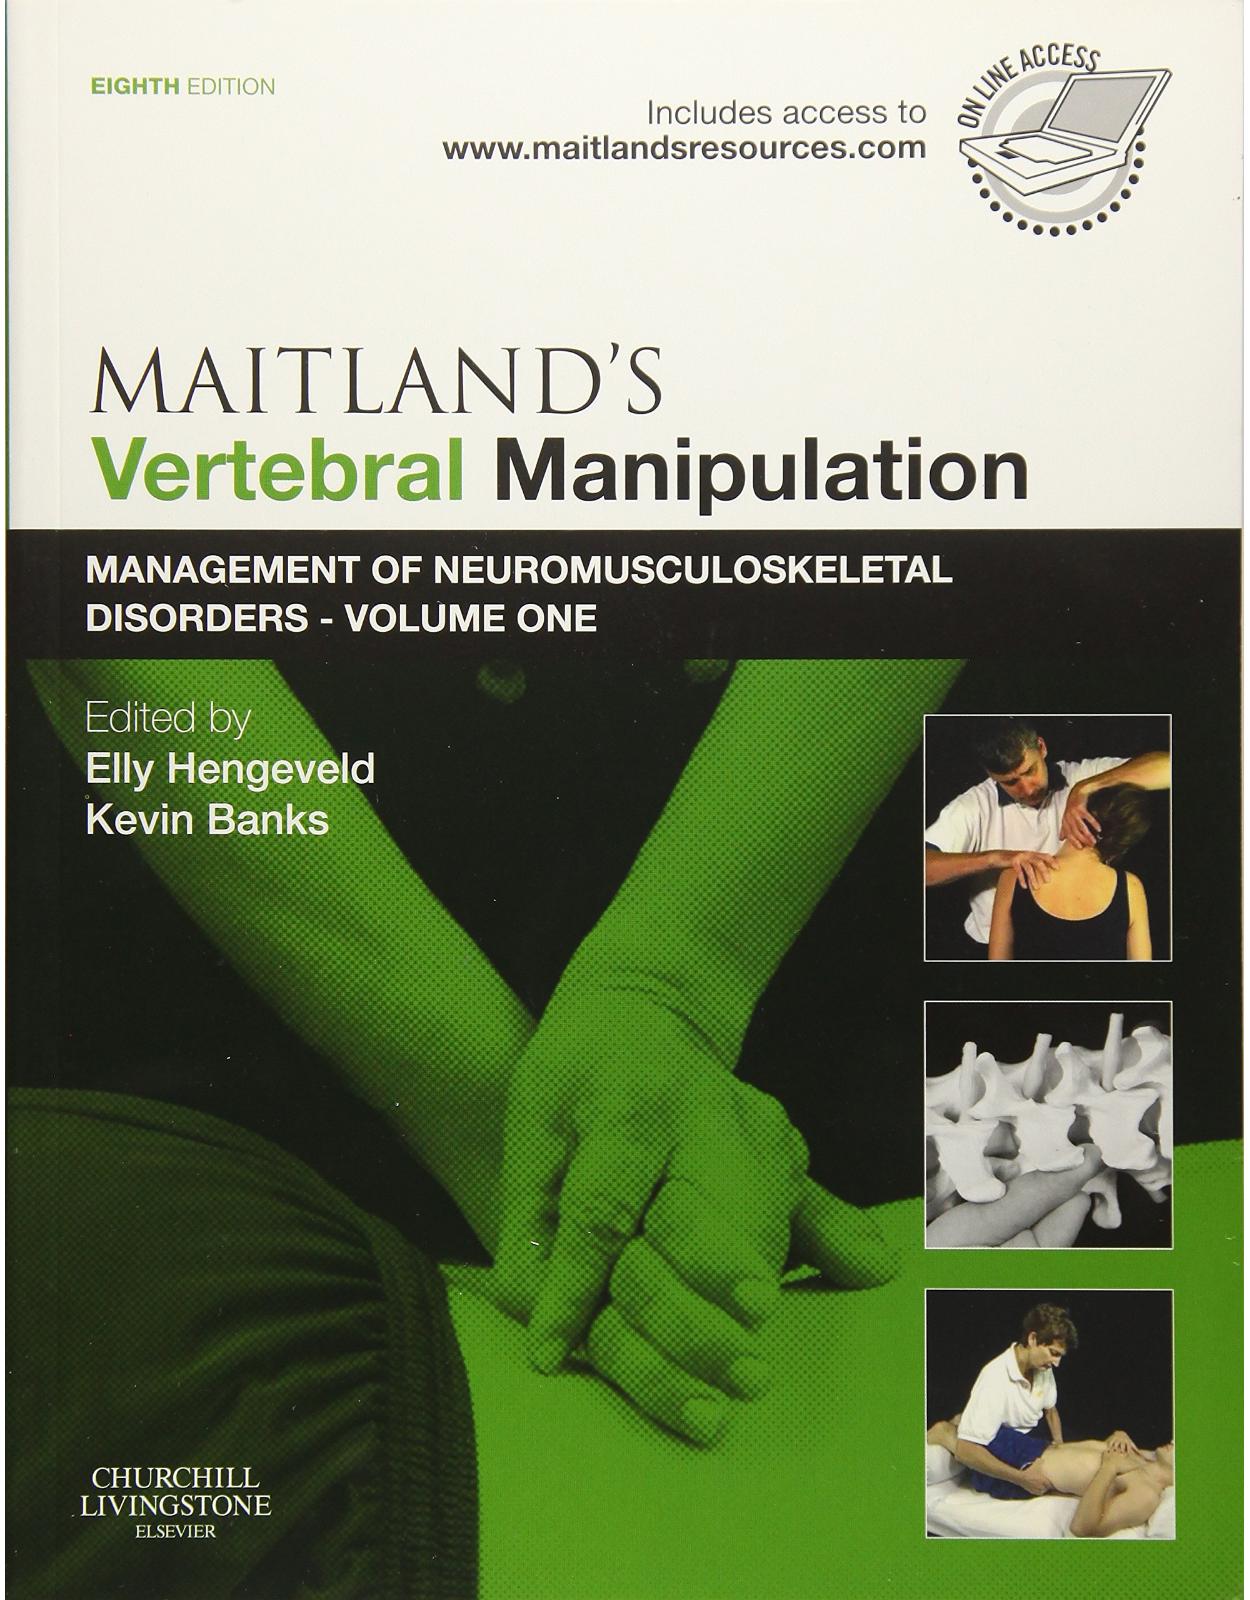 Maitland’s Vertebral Manipulation: Management of Neuromusculoskeletal Disorders - Volume 1, 8e